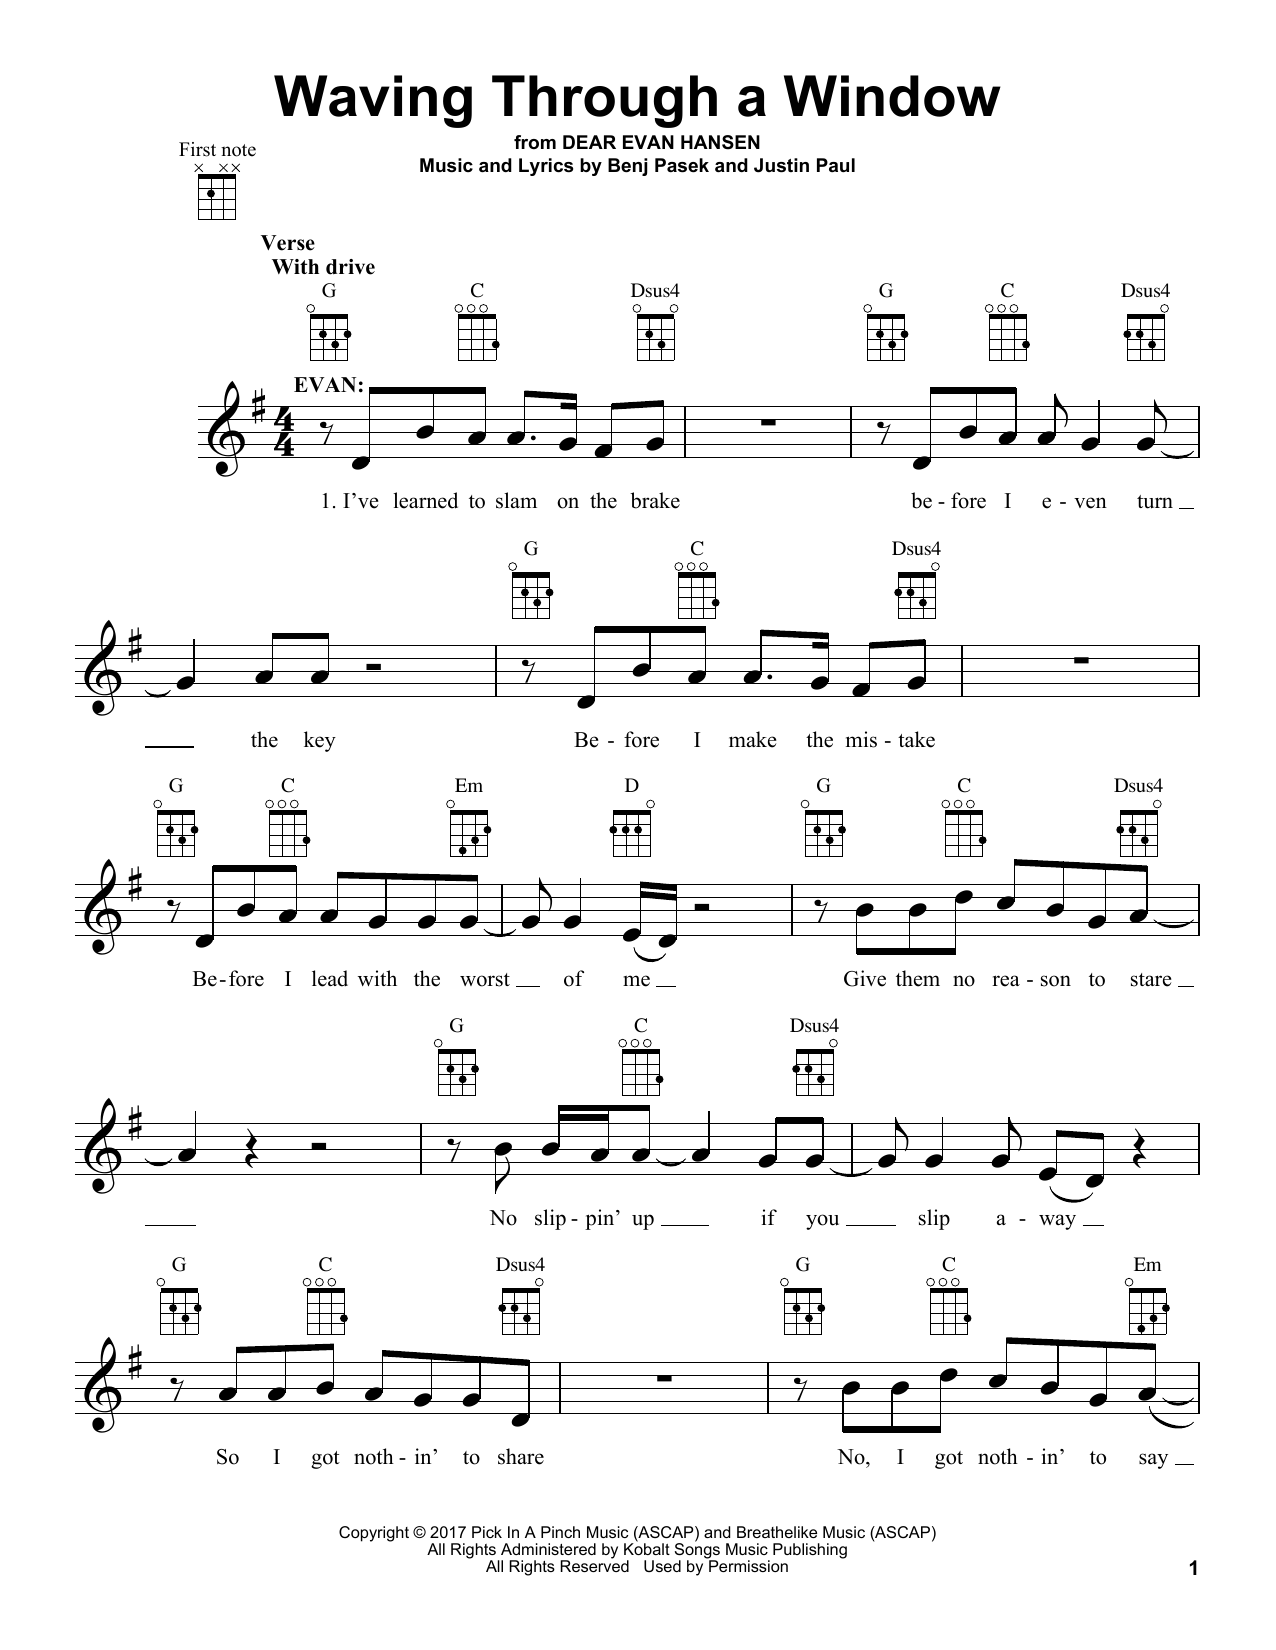 Pasek & Paul Waving Through A Window (from Dear Evan Hansen) Sheet Music Notes & Chords for Guitar Chords/Lyrics - Download or Print PDF